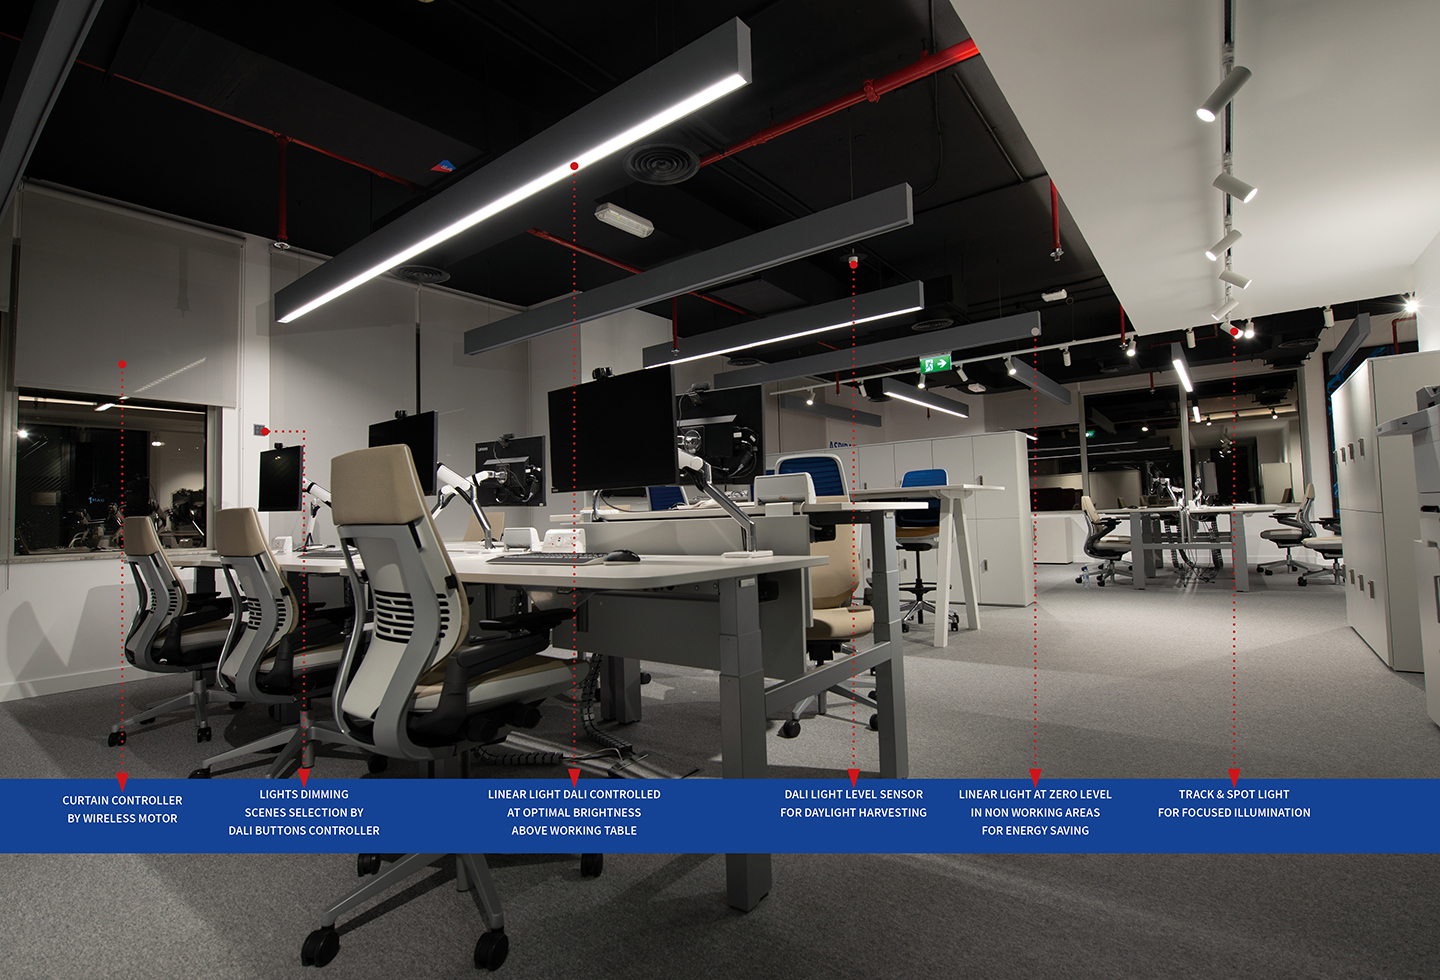 DALI-lighting control-Lighting Management System-modern lighting-office lighting-modern office lighting ideas